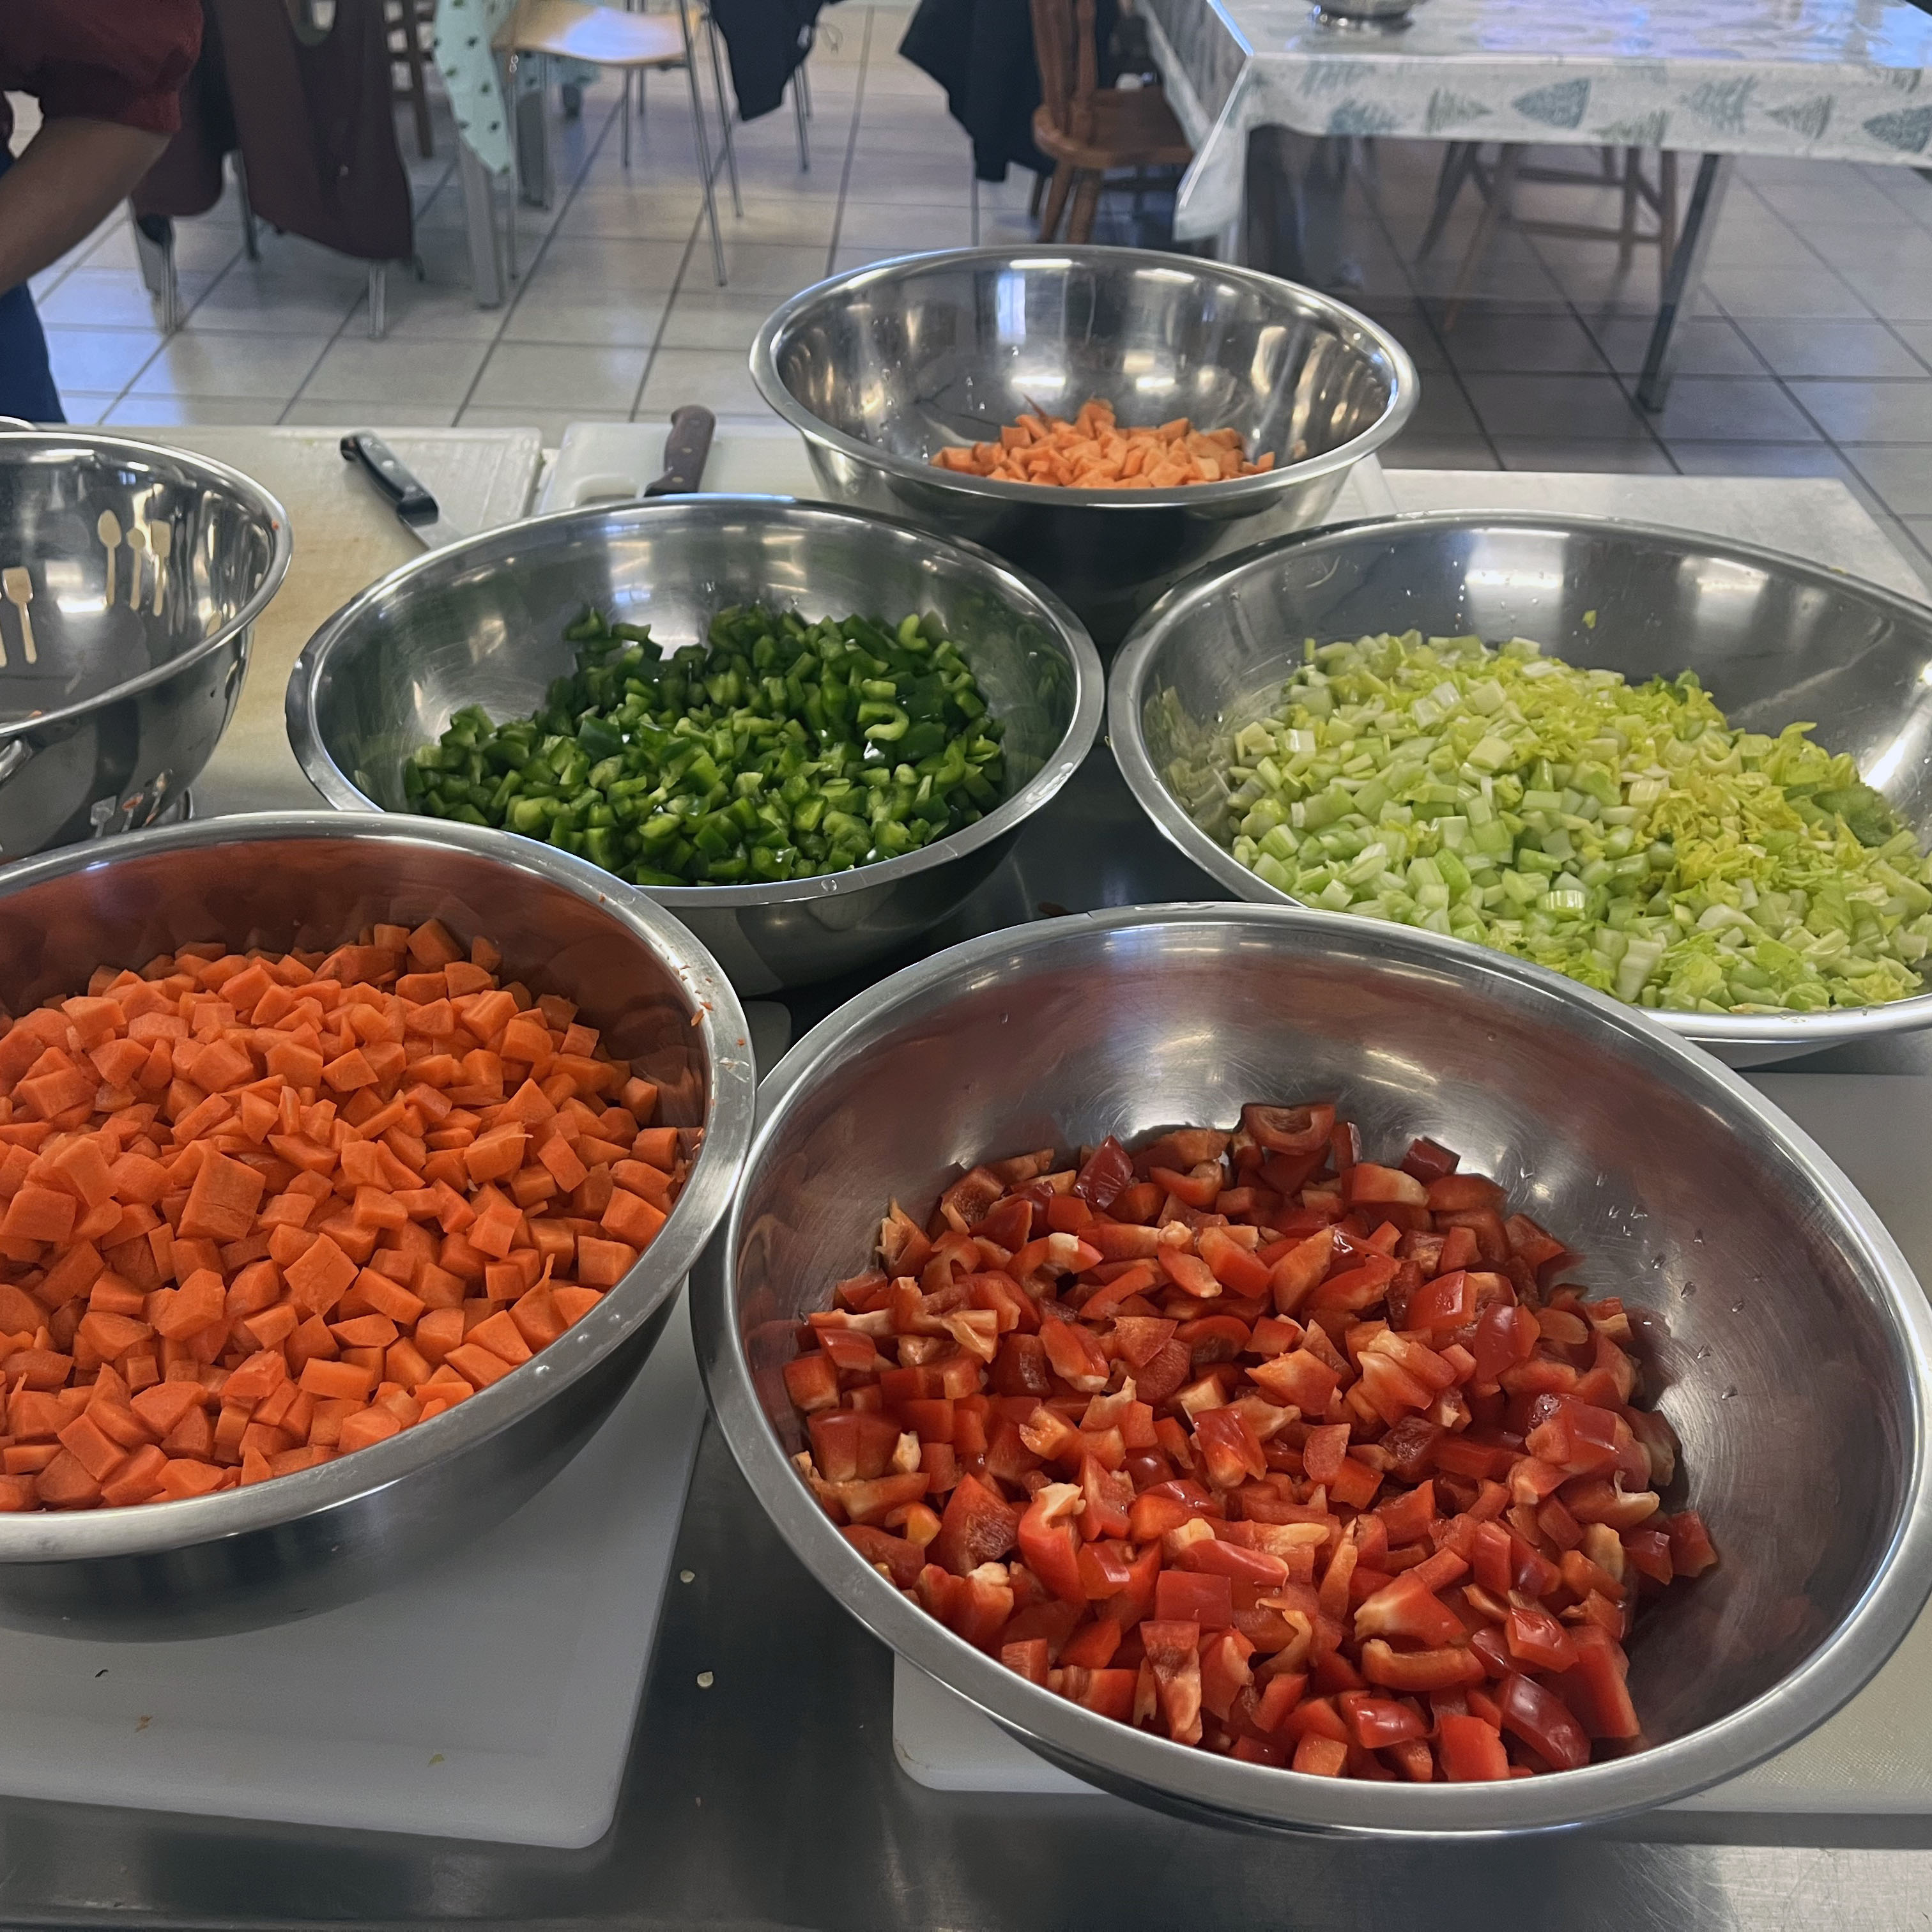 Bowls of chopped veggies